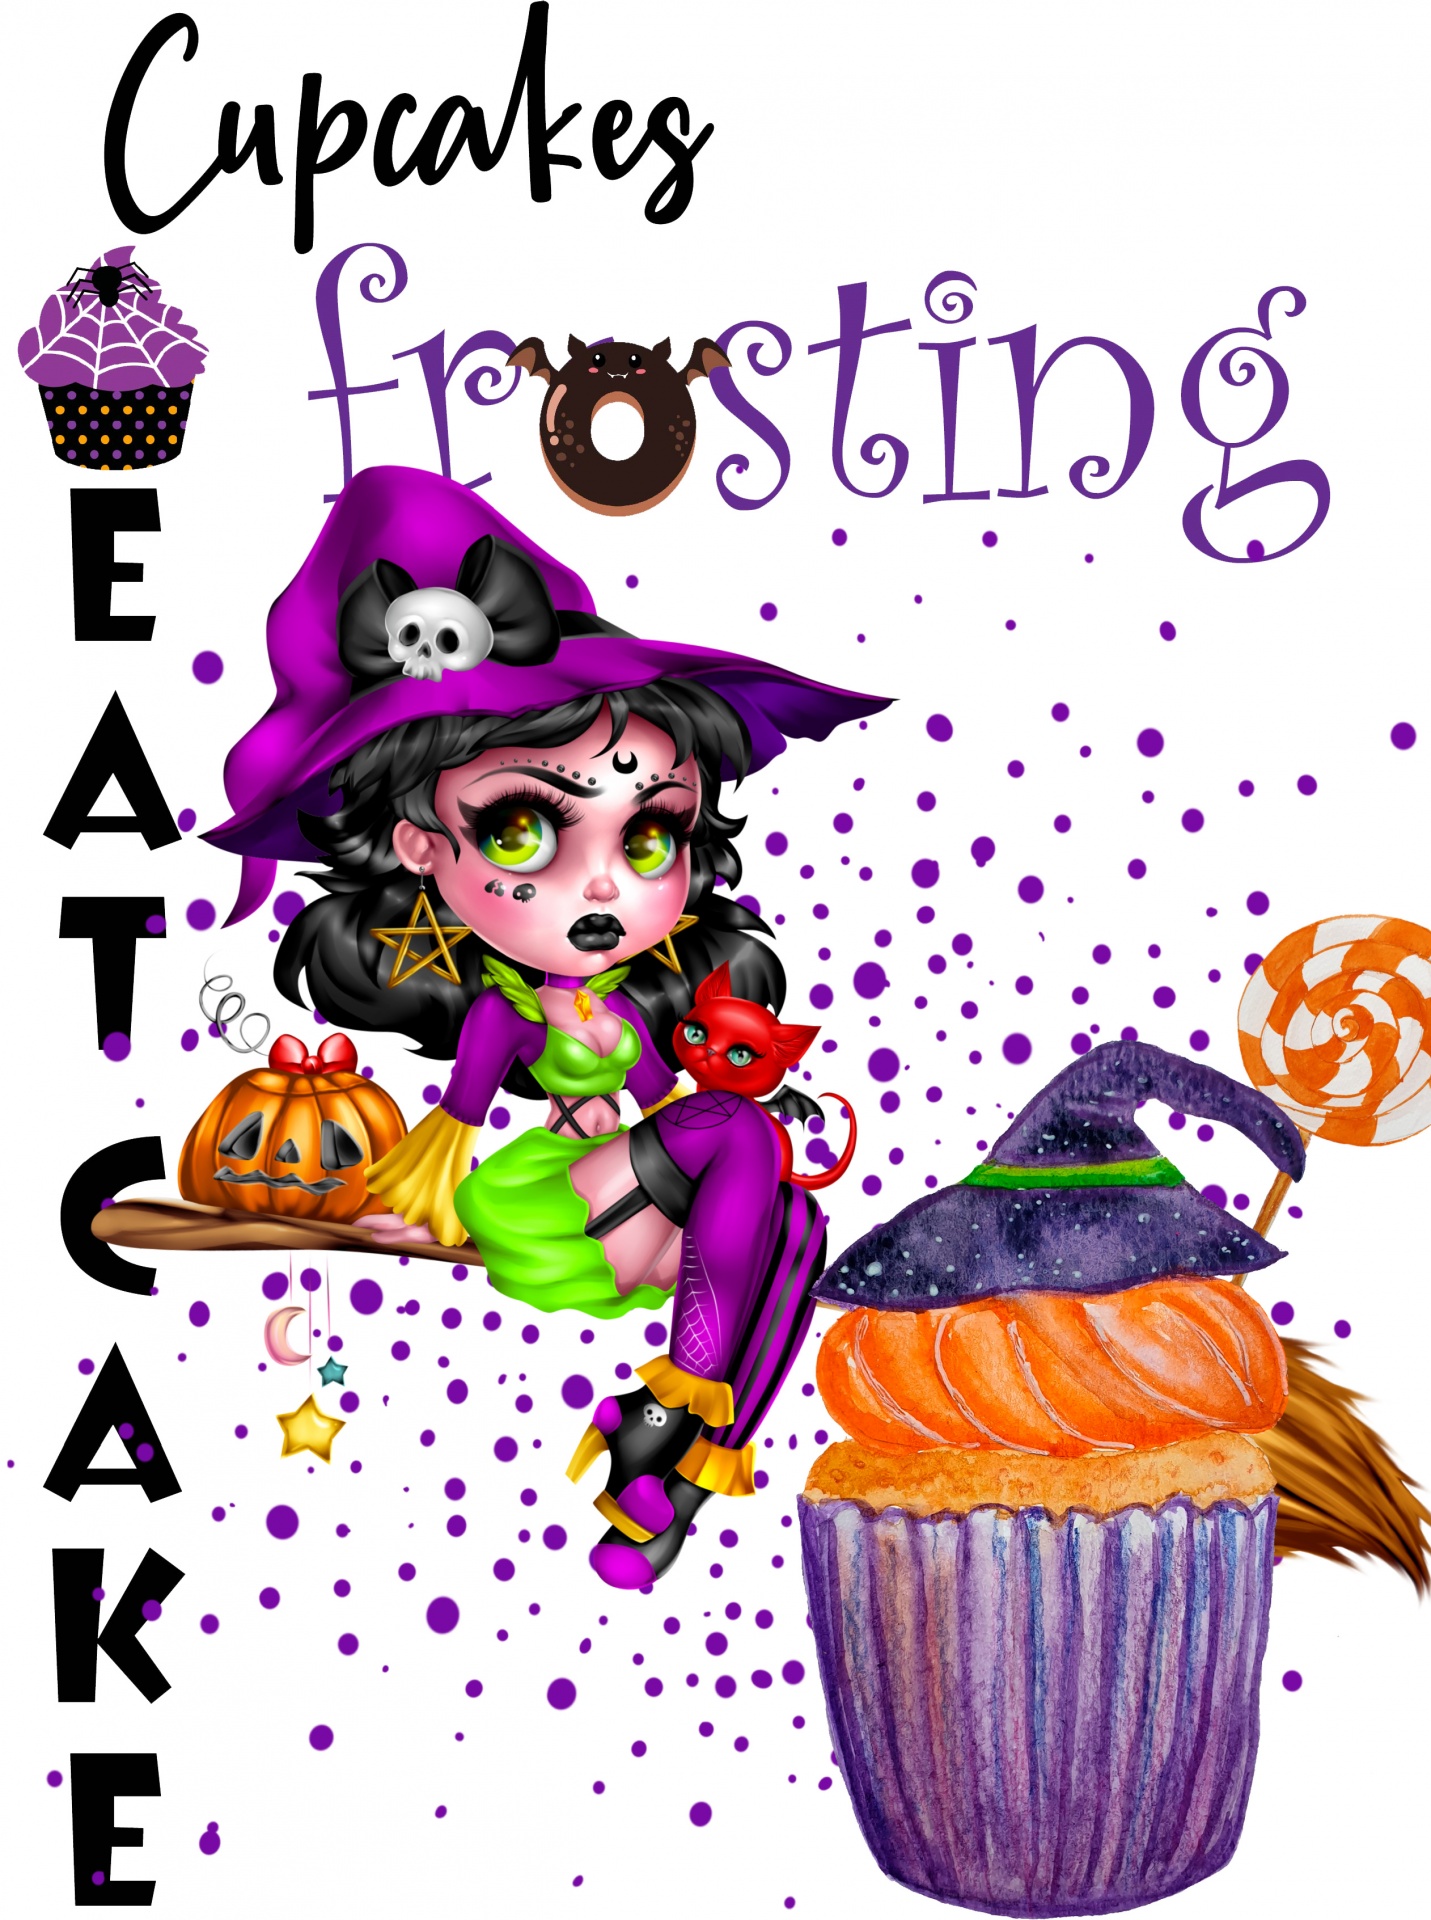 Halloween decorated cupcakes illustration